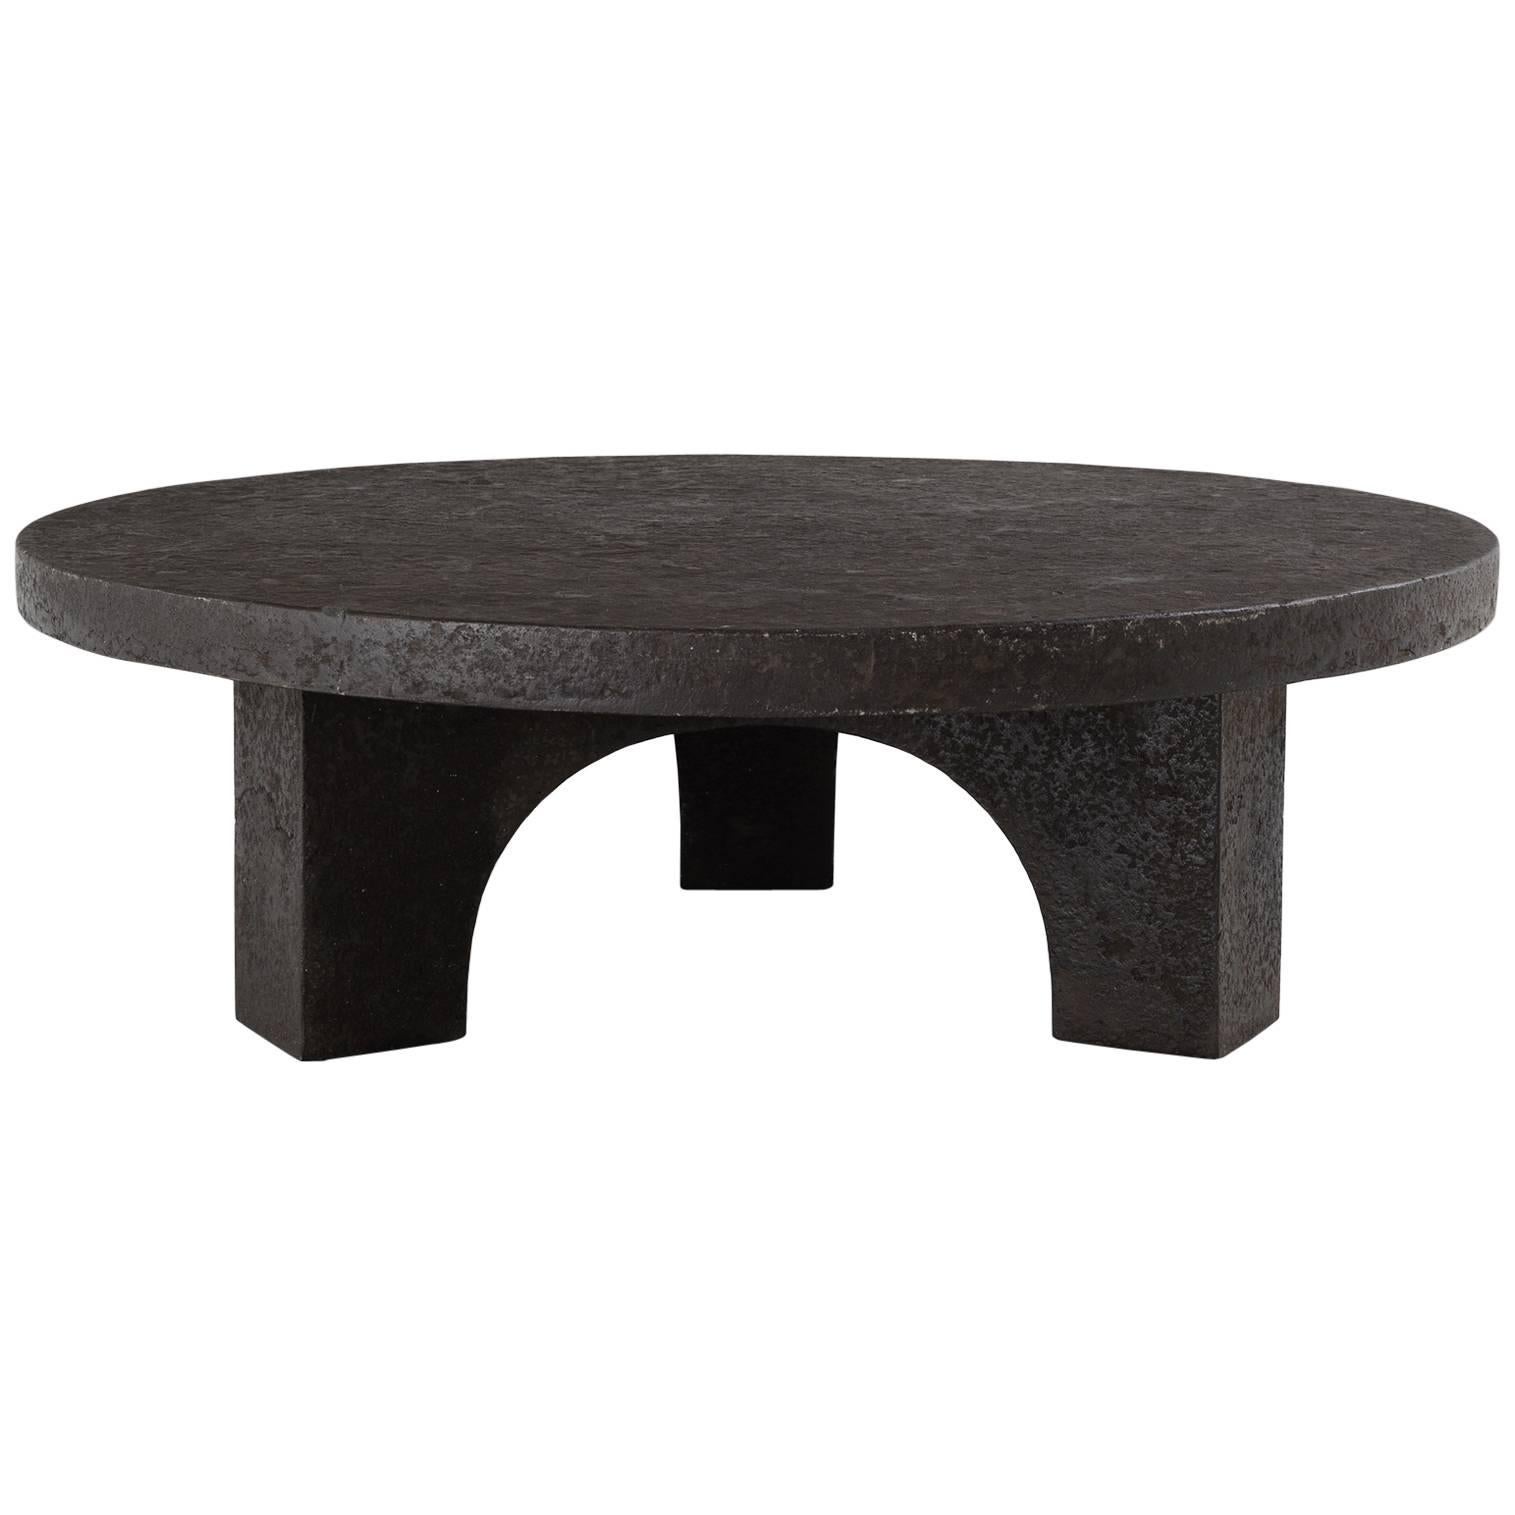 Round Stone Iron Look Coffee Table